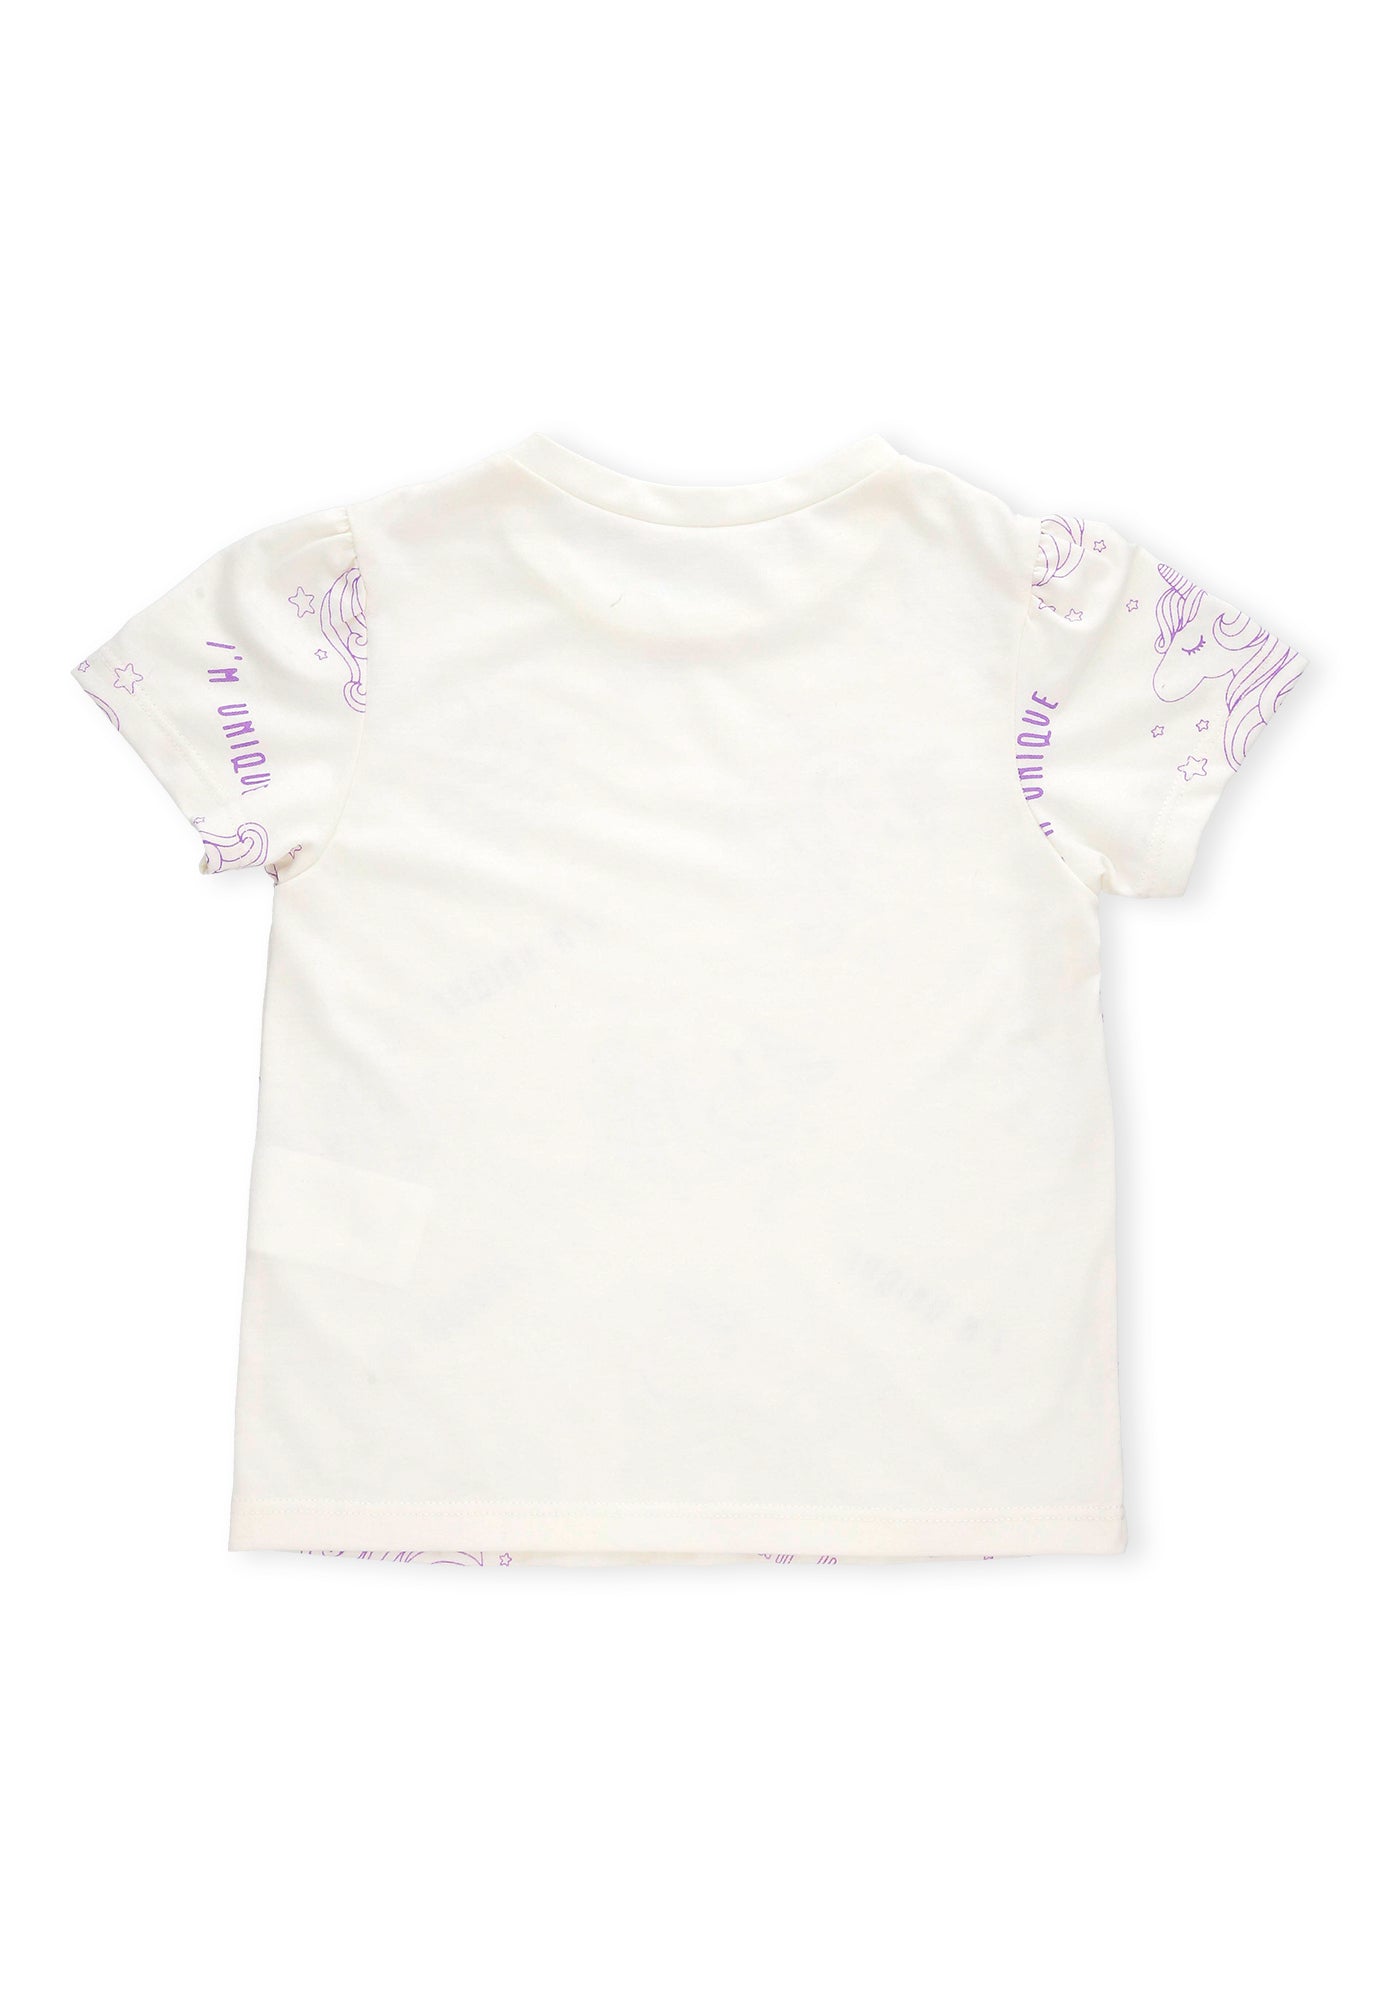 Camiseta ivory sublimada, cuello redondo y manga corta para bebé niña